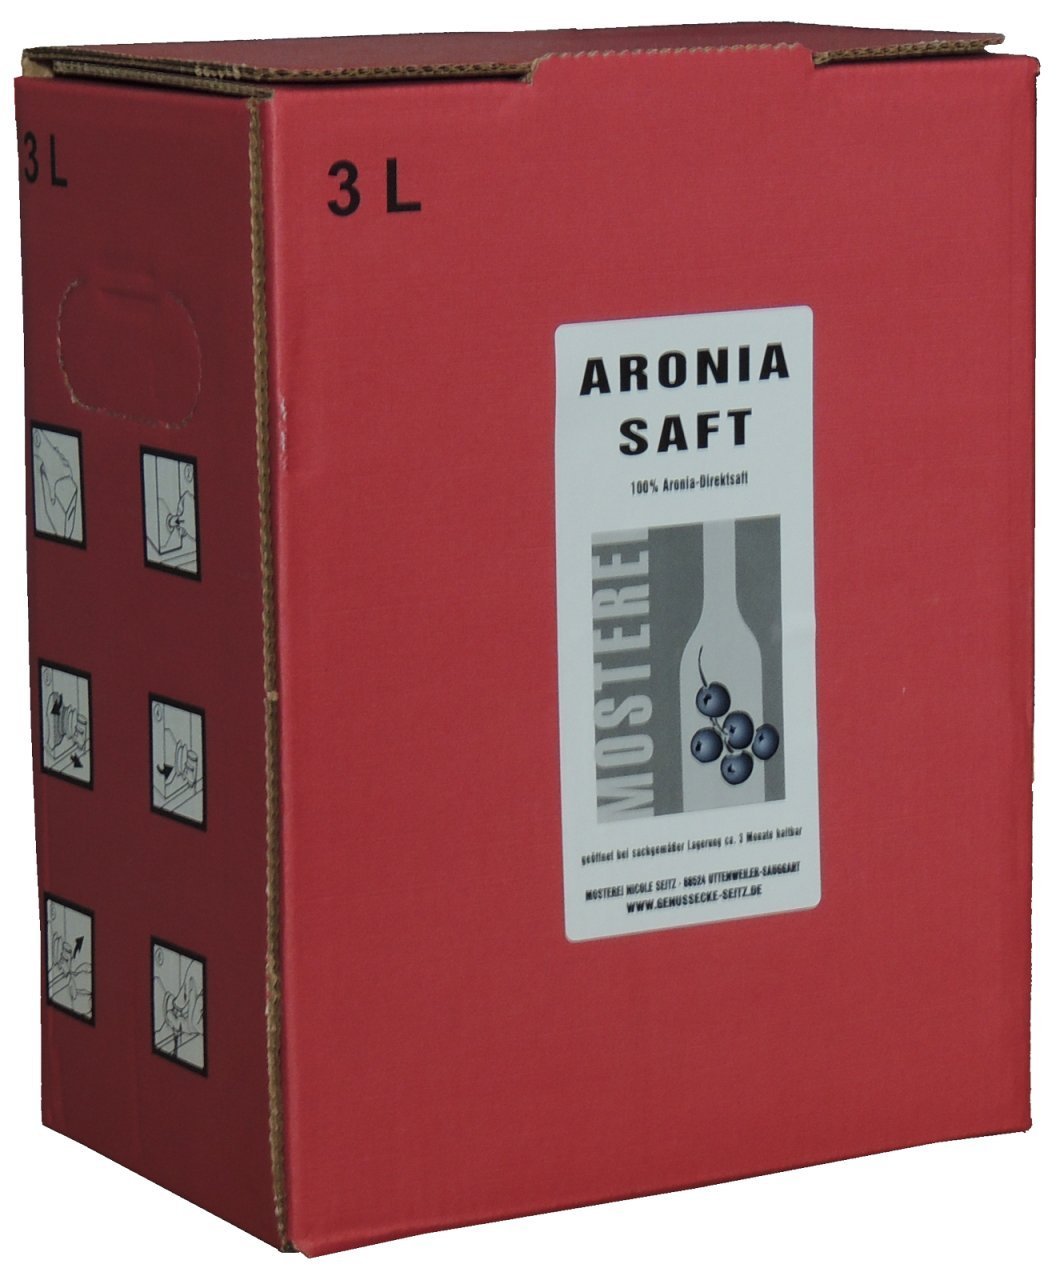 Aronia-Saft Direktsaft 3x 3L Bag in Box